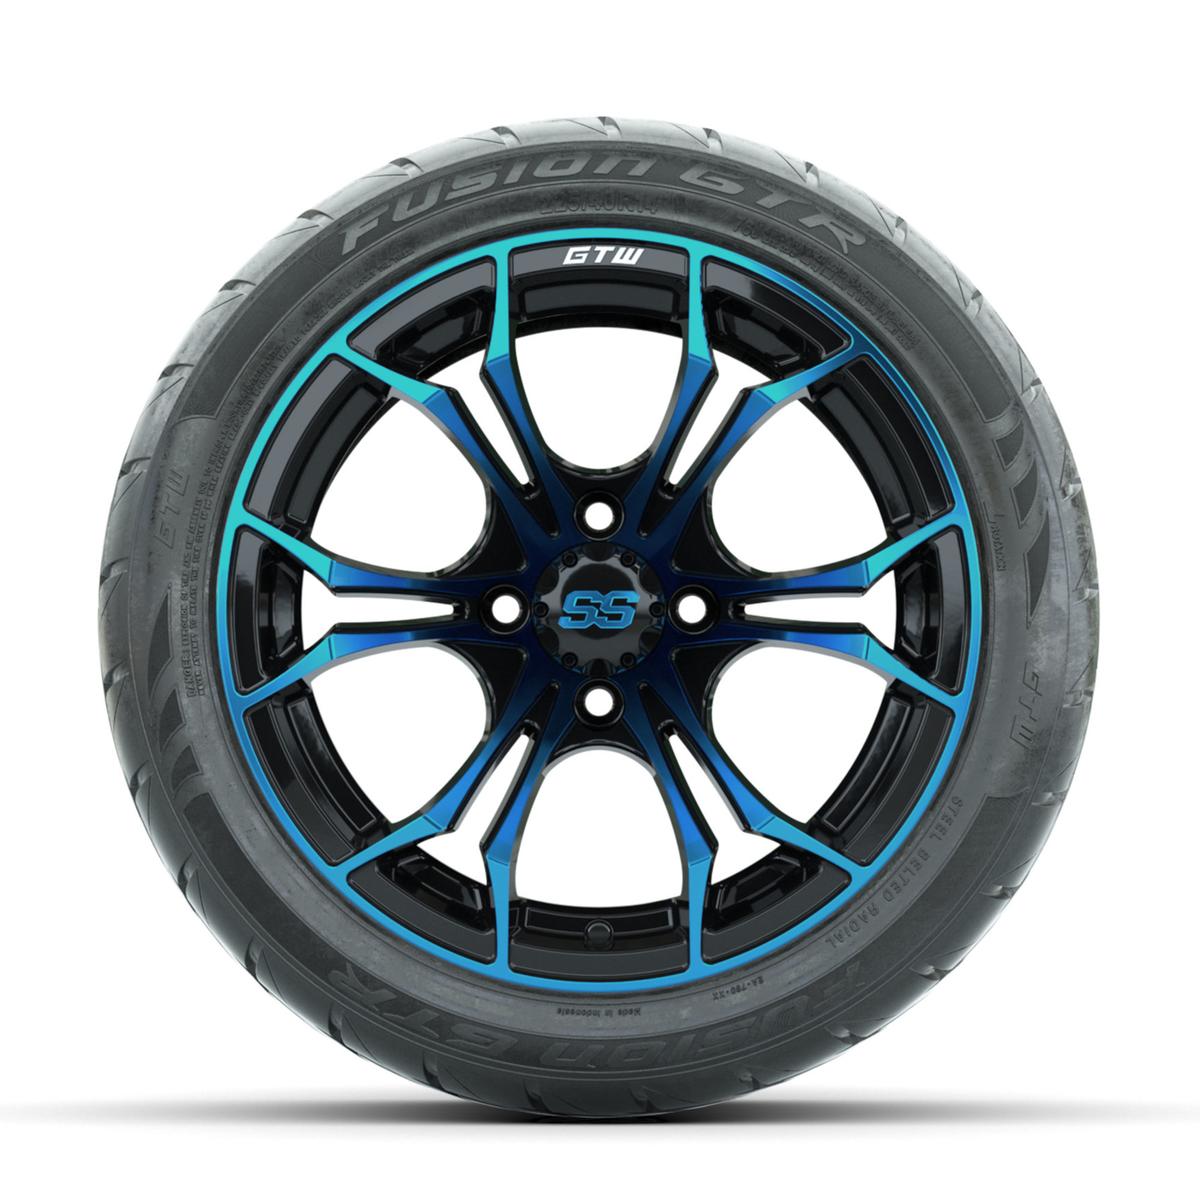 GTW Spyder Blue/Black 14 in Wheels with 225/40-R14 Fusion GTR Street Tires – Full Set